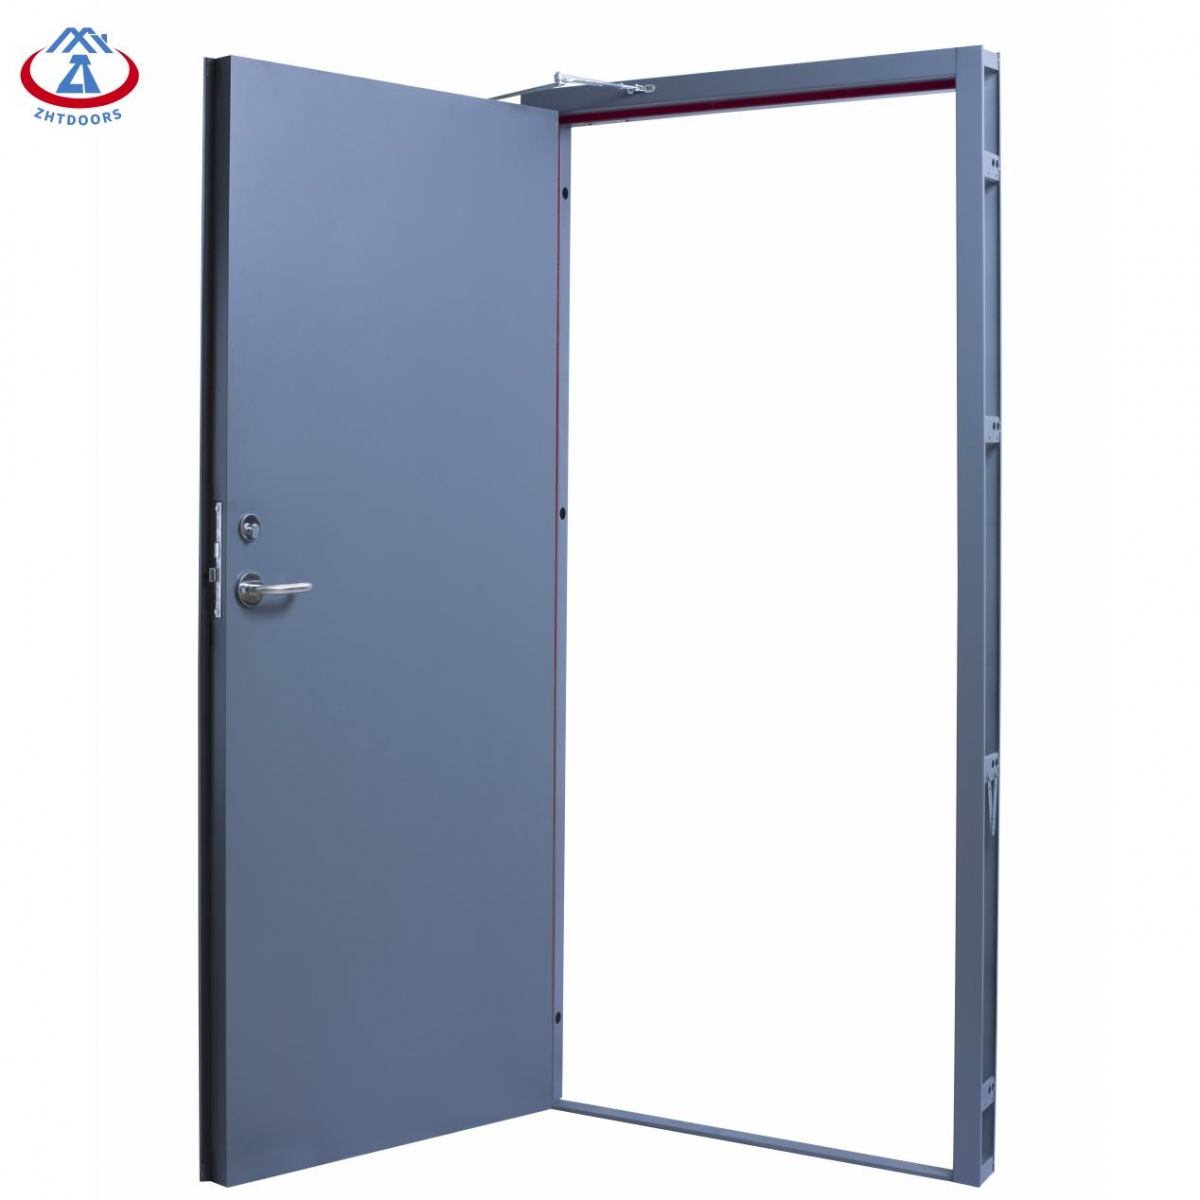 Fire Resistant Sulod sa 180 Minutos Galvanized Fireproof Doors-ZTFIRE Door- Fire Door, Fireproof Door, Fire rated Door, Fire Resistant Door, Steel Door, Metal Door, Exit Door